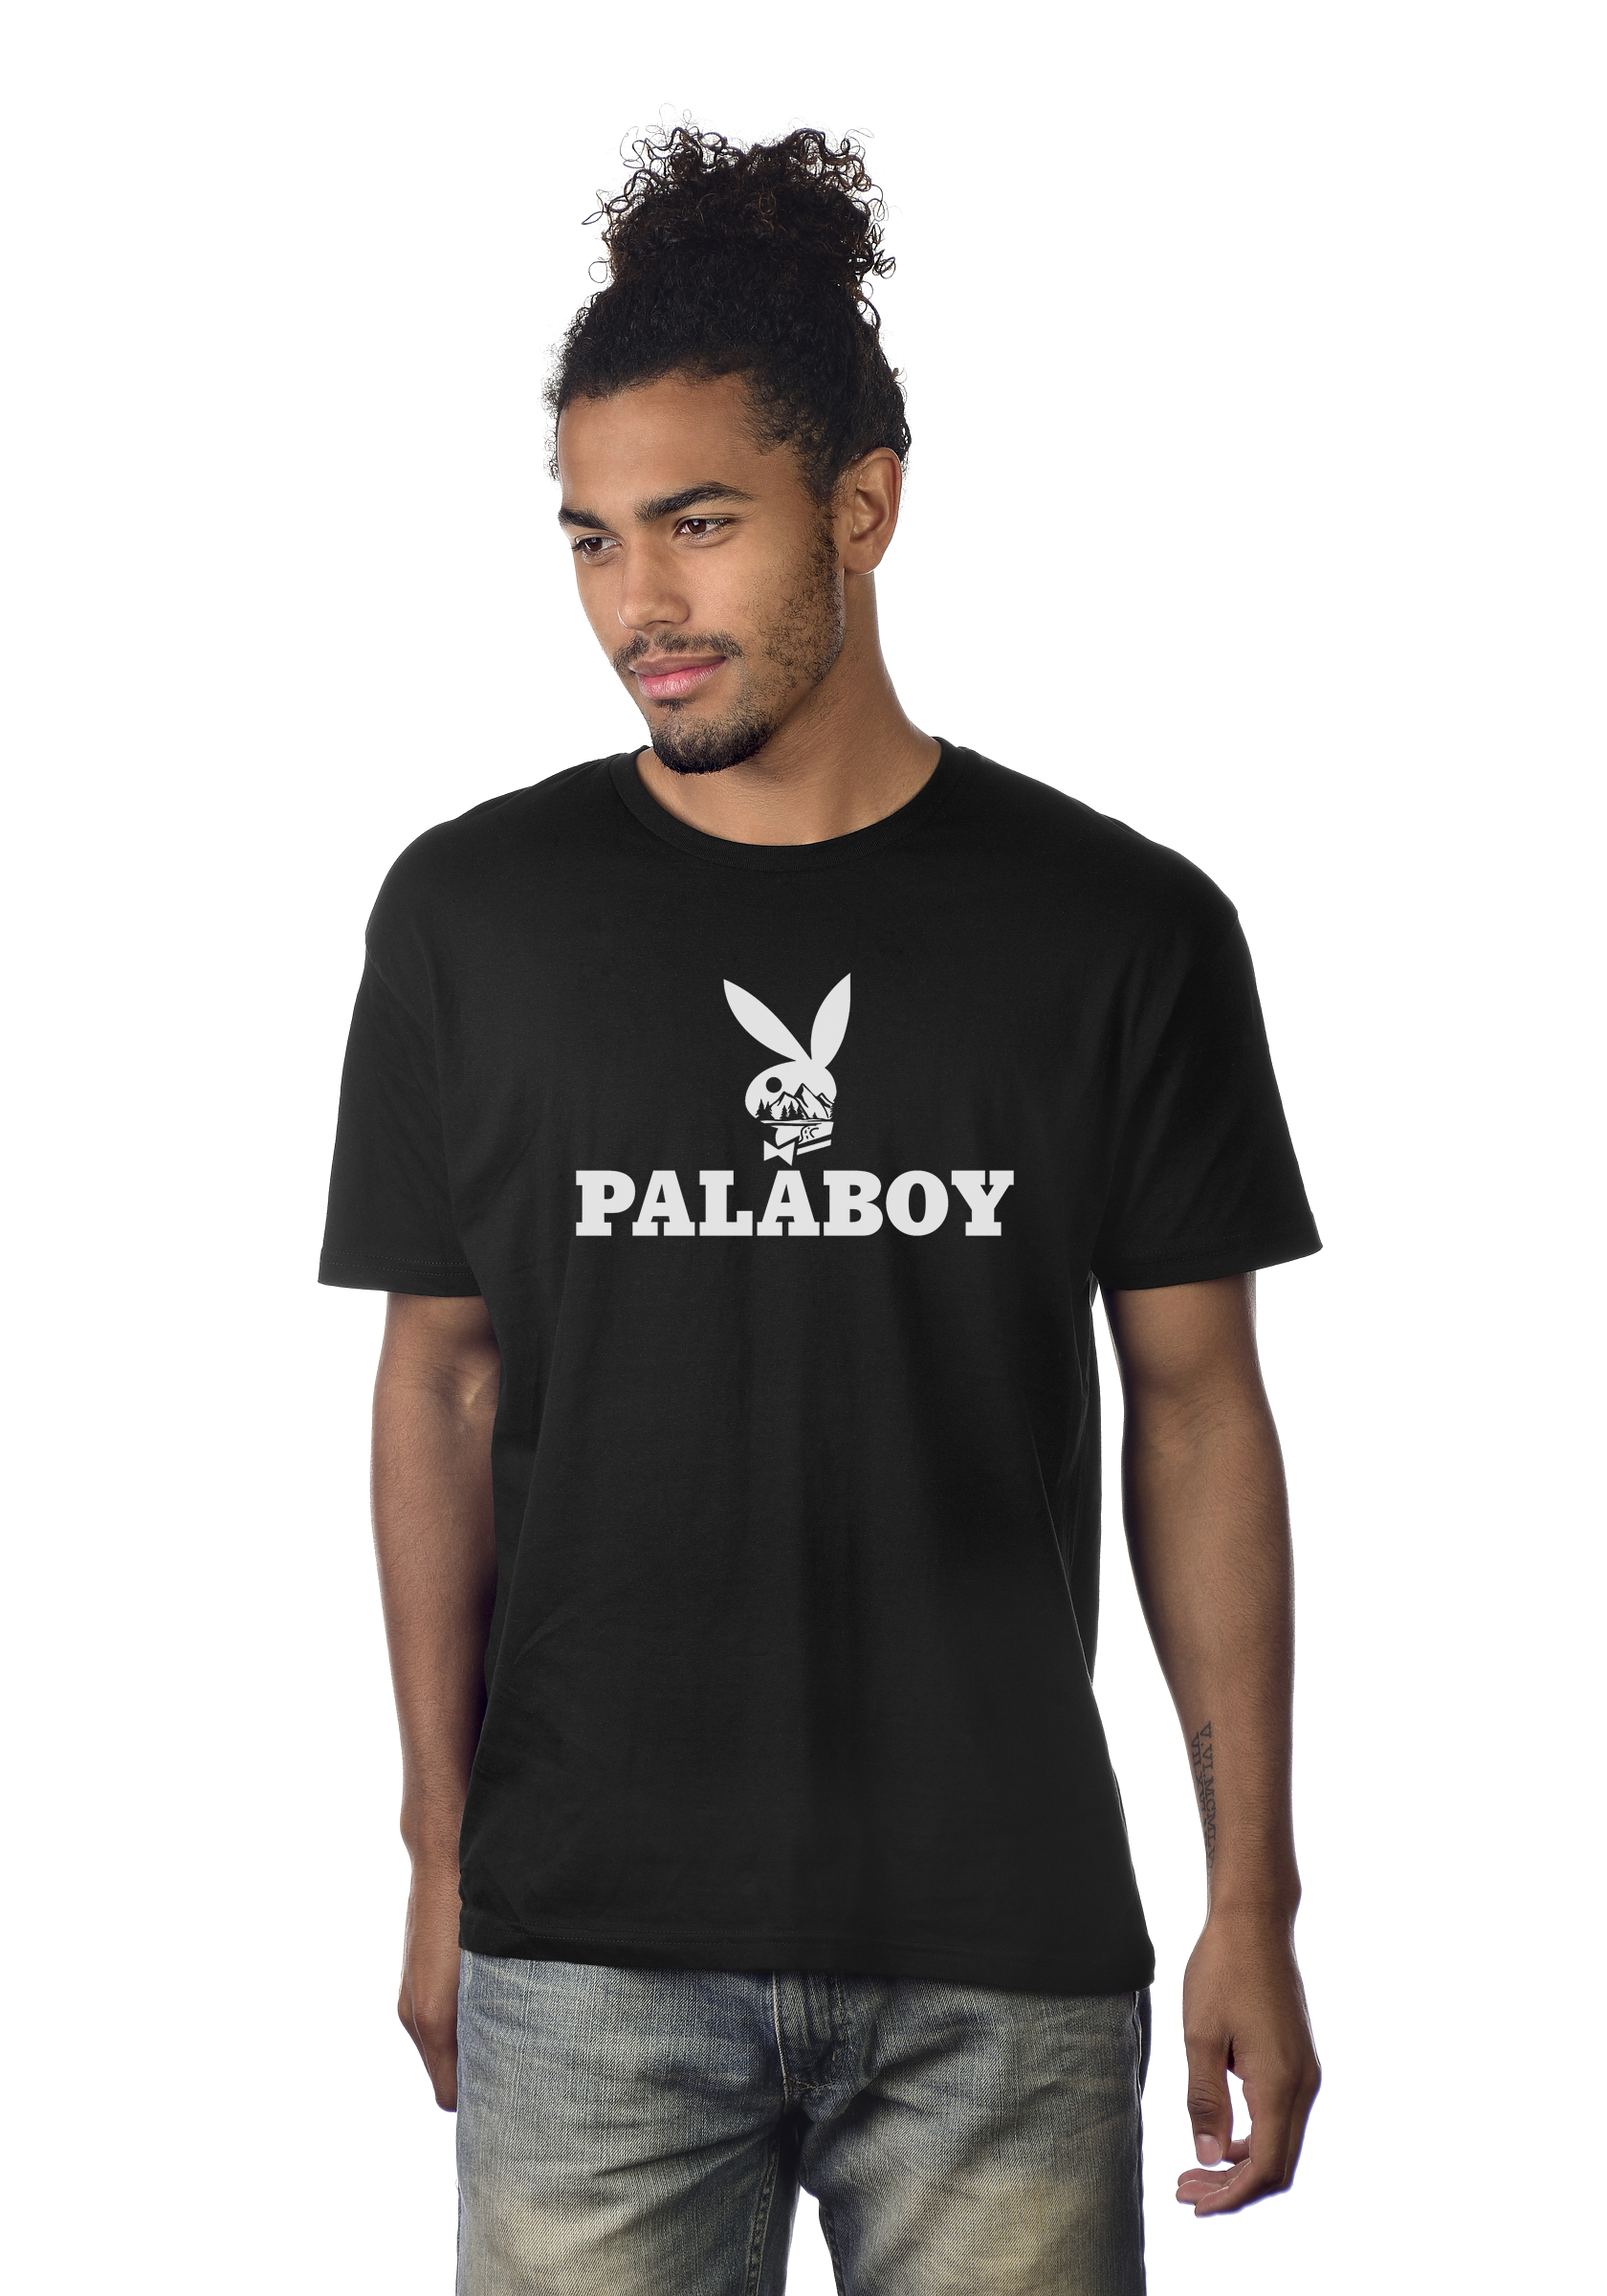 palaboy t-shirtplayboy palaboy parody funny t-shirts, moymoy palaboy, gala pa more, 